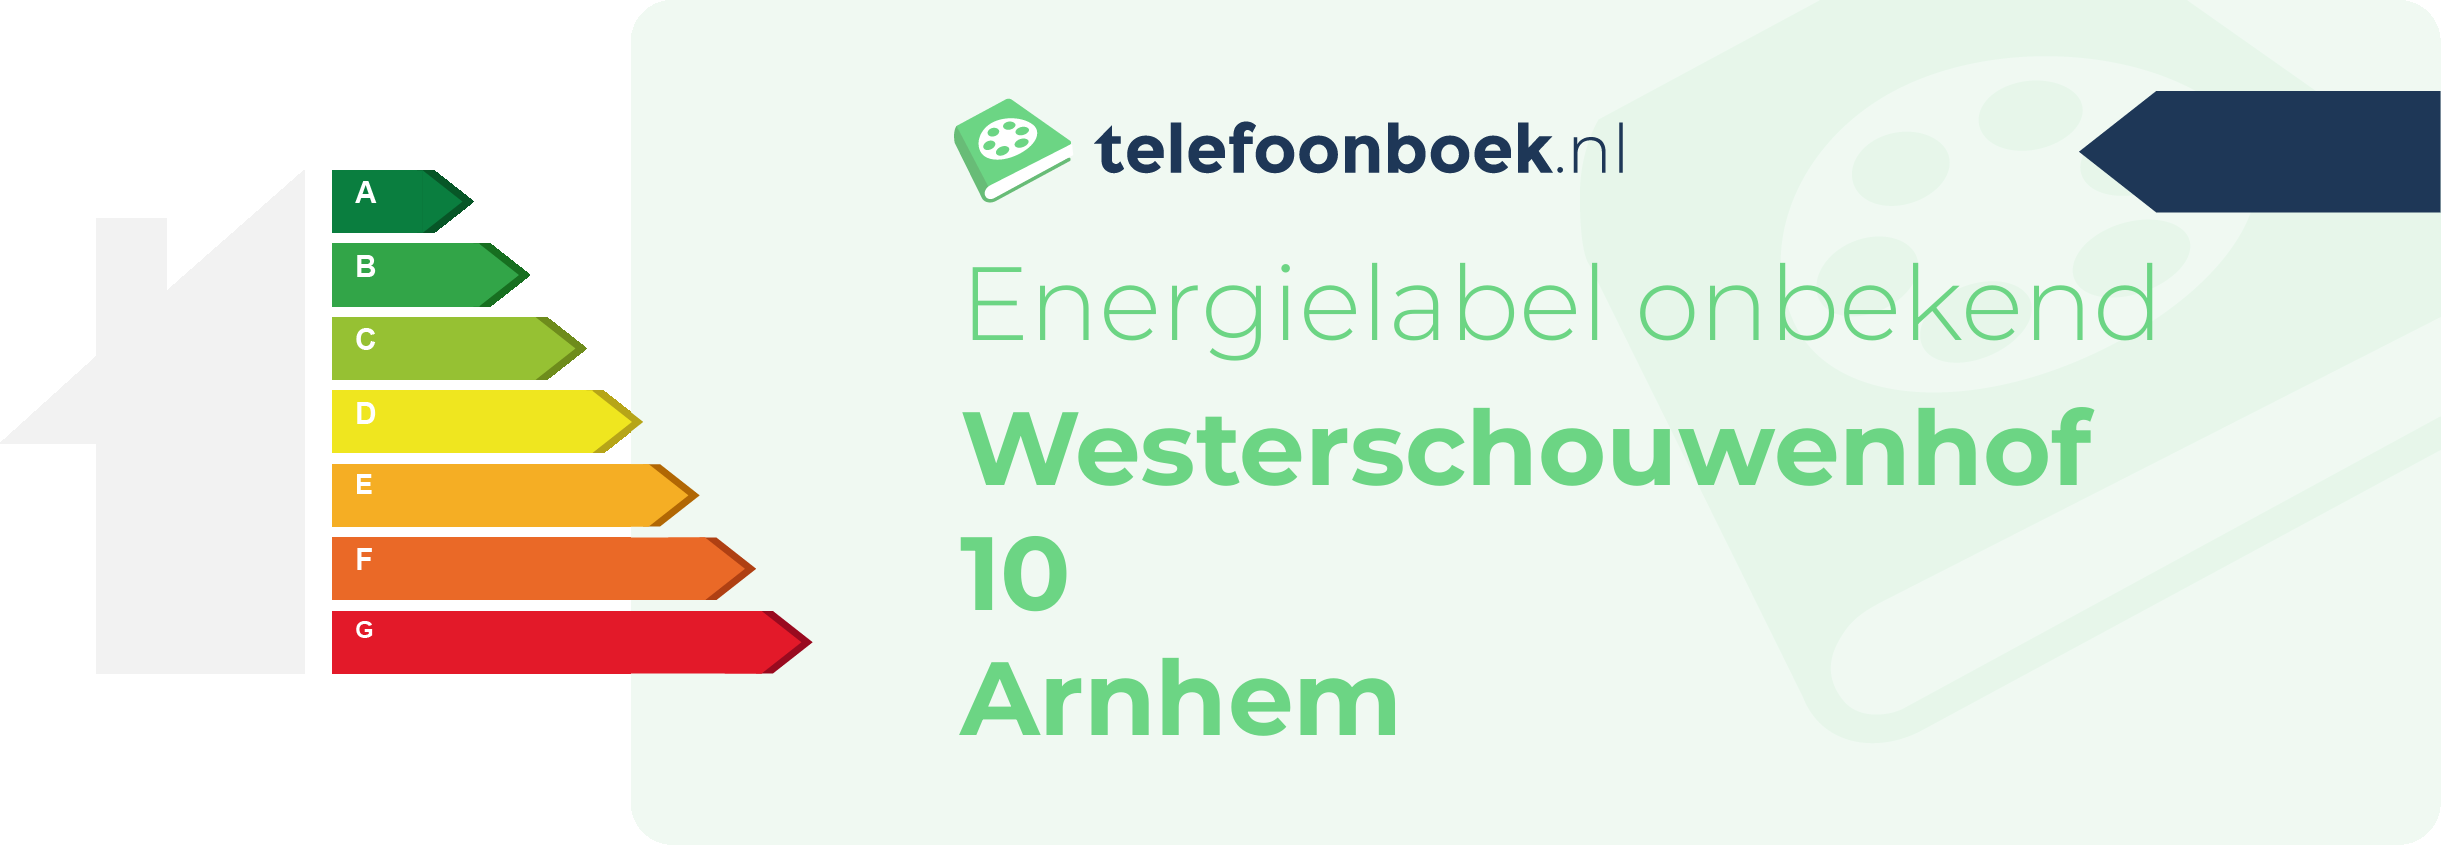 Energielabel Westerschouwenhof 10 Arnhem